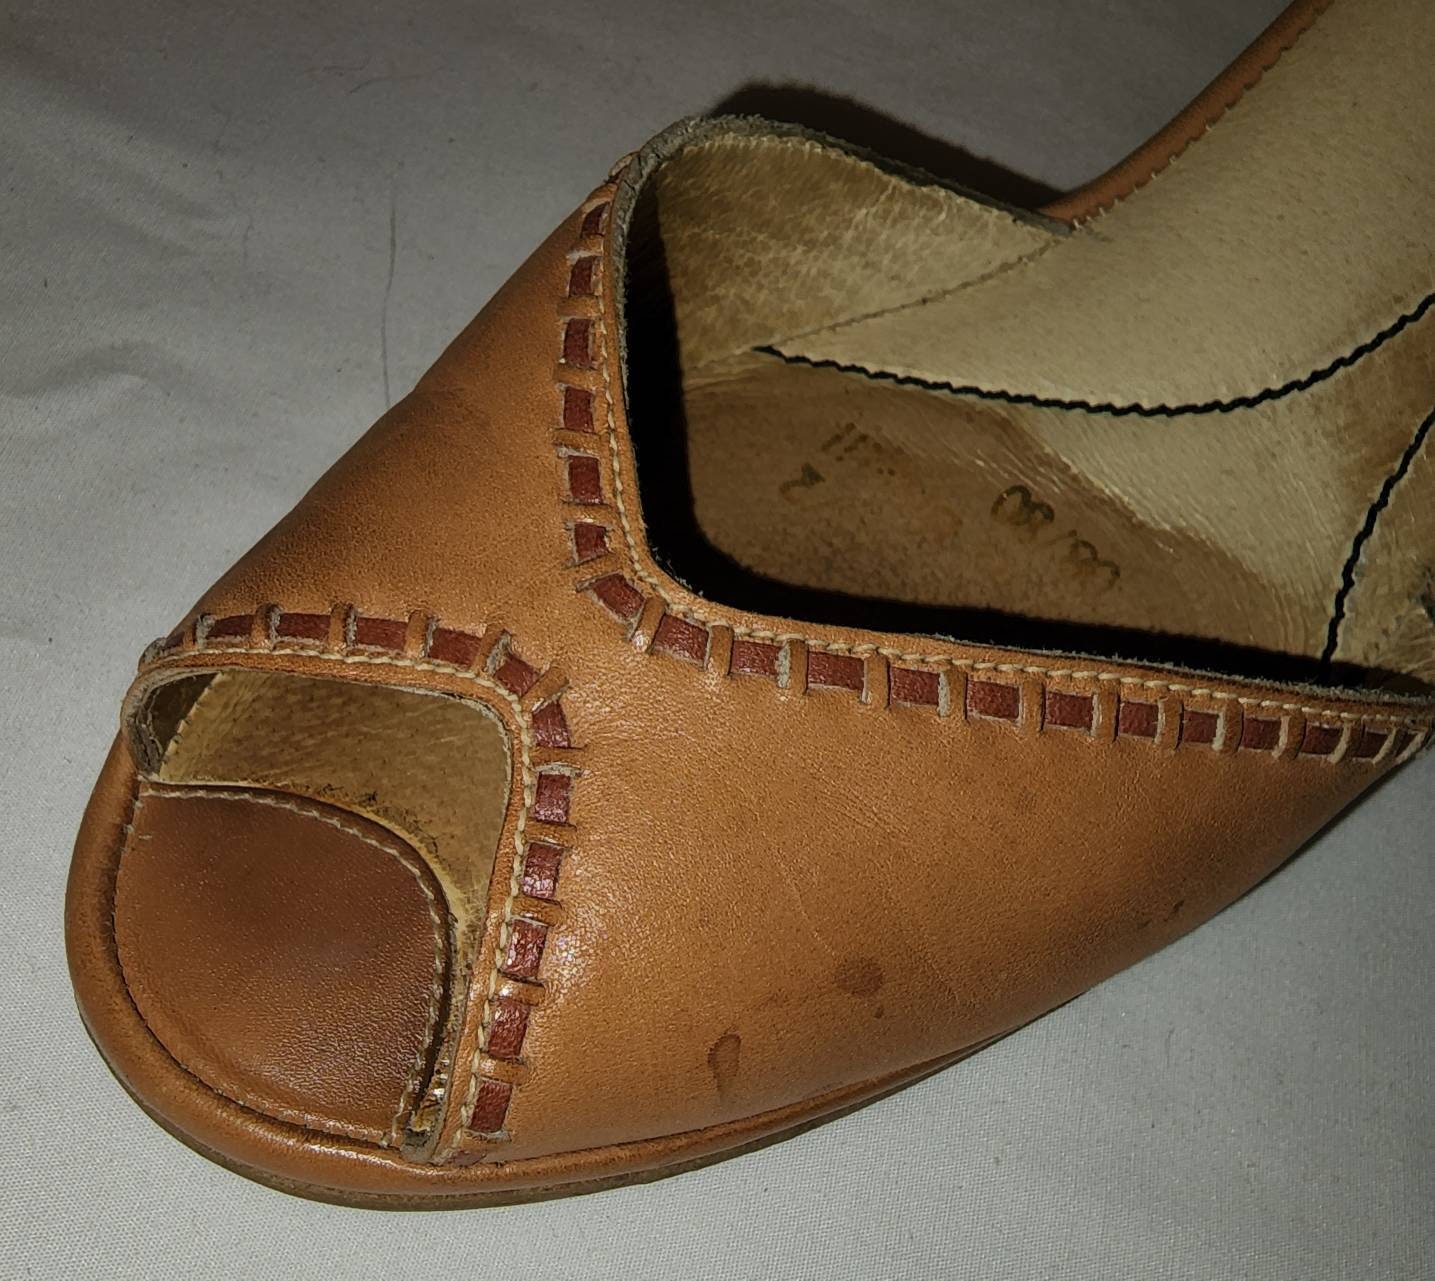 Vintage Rockport Sandals 1970s 80s Tan Leather Wedge Heel Open Toe Sandals Contrasting Trim Sunlights Boho 7 1/2 B